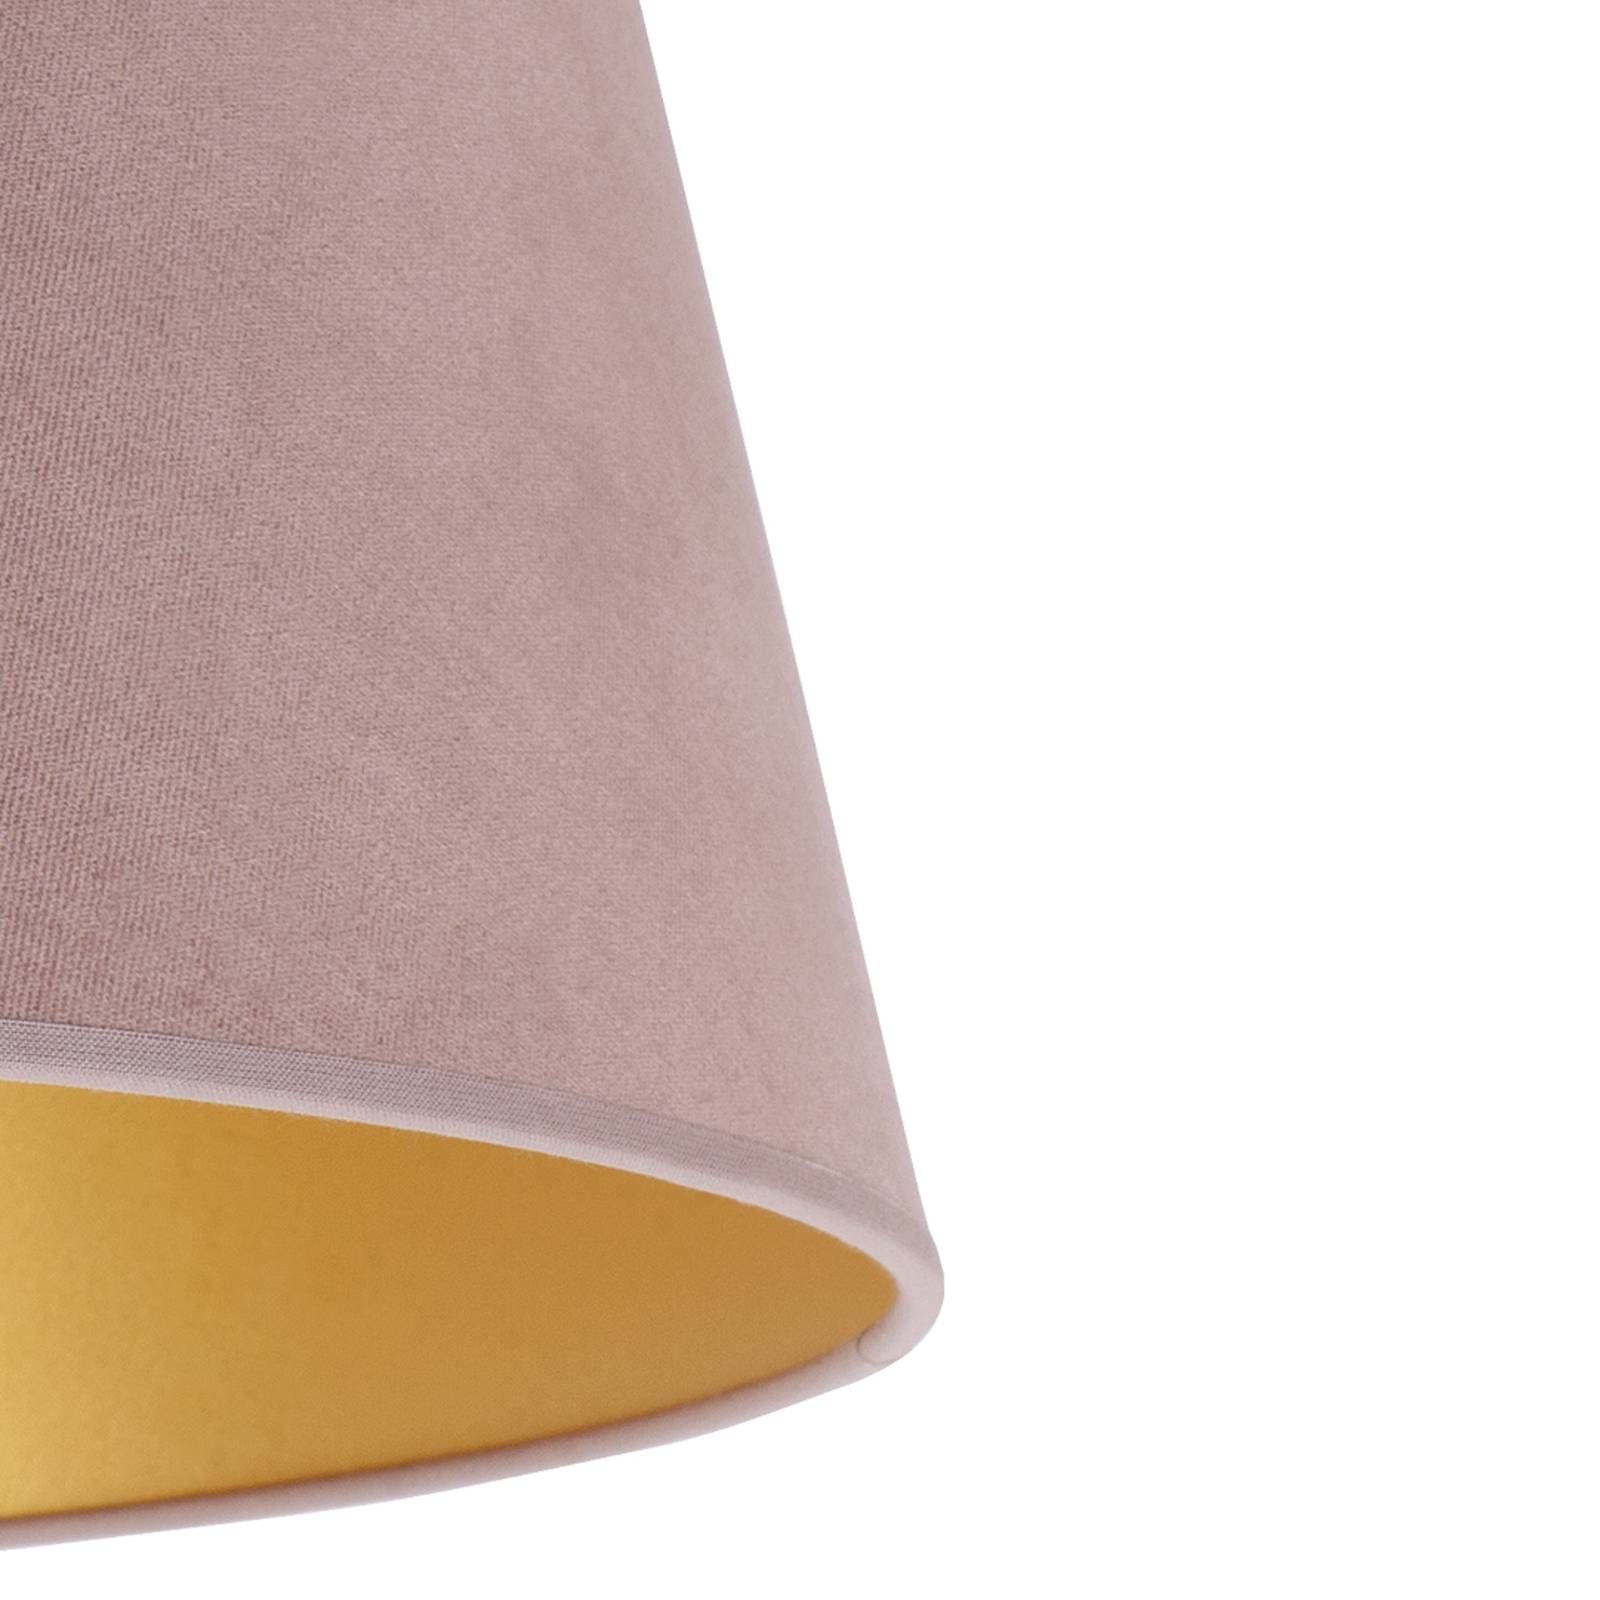 Duolla cone lámpaernyő 25,5 cm magas, rózsaszín/arany